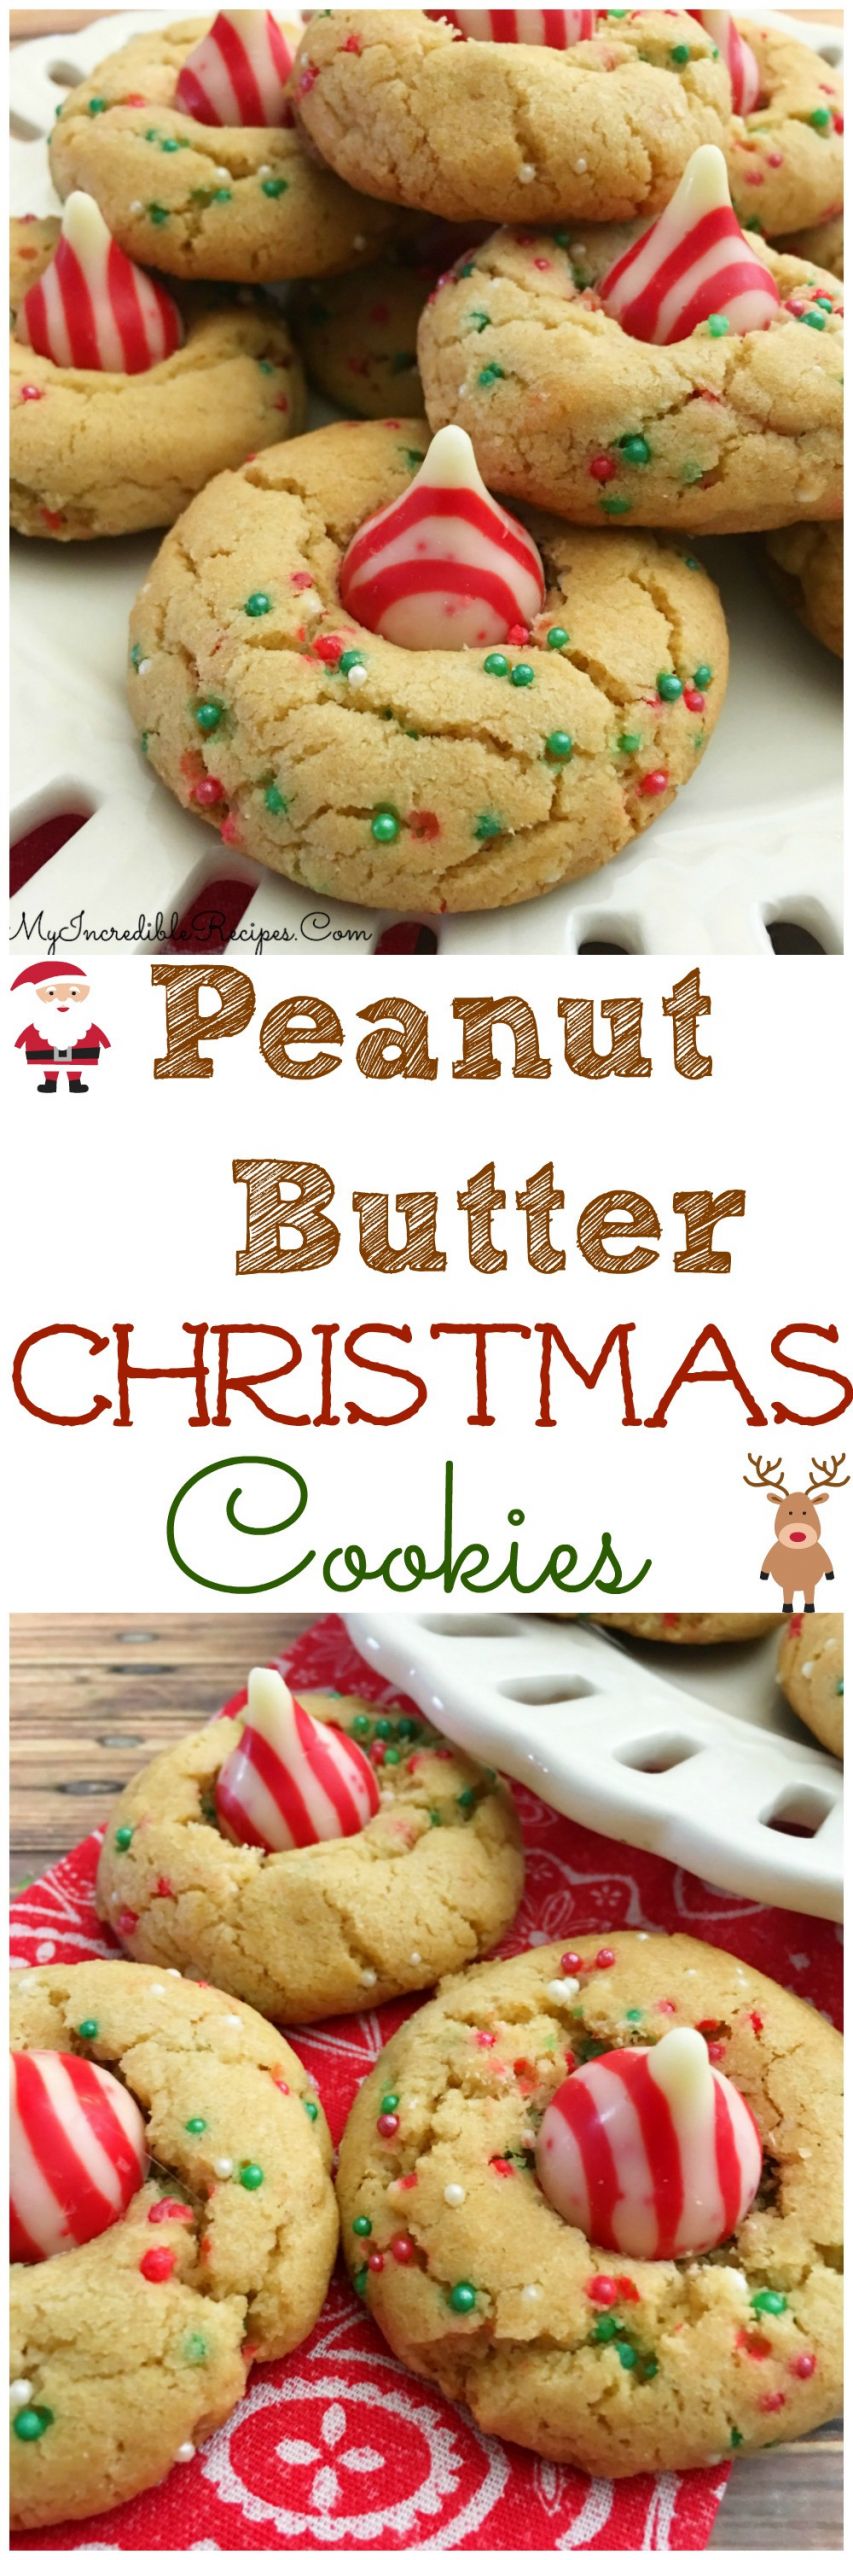 Pinterest Christmas Cookies
 Peanut Butter Christmas Cookies